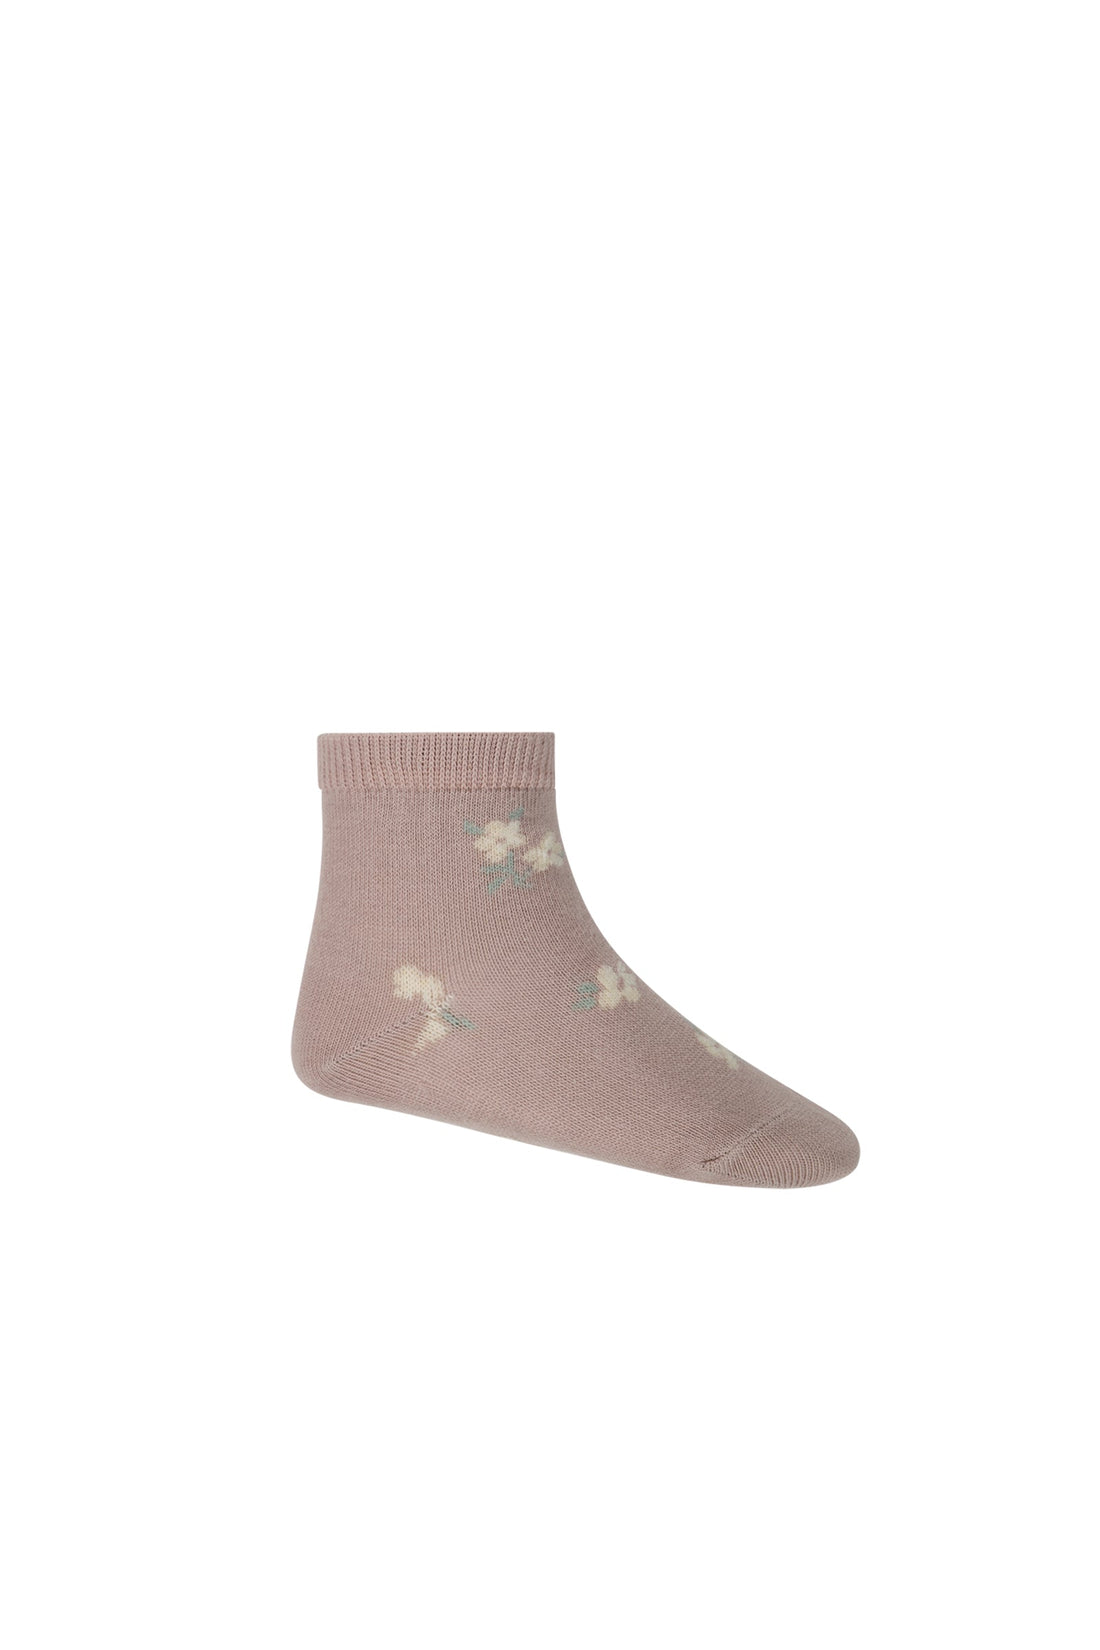 Jacquard Floral Sock - Simple Flowers Dusky Rose